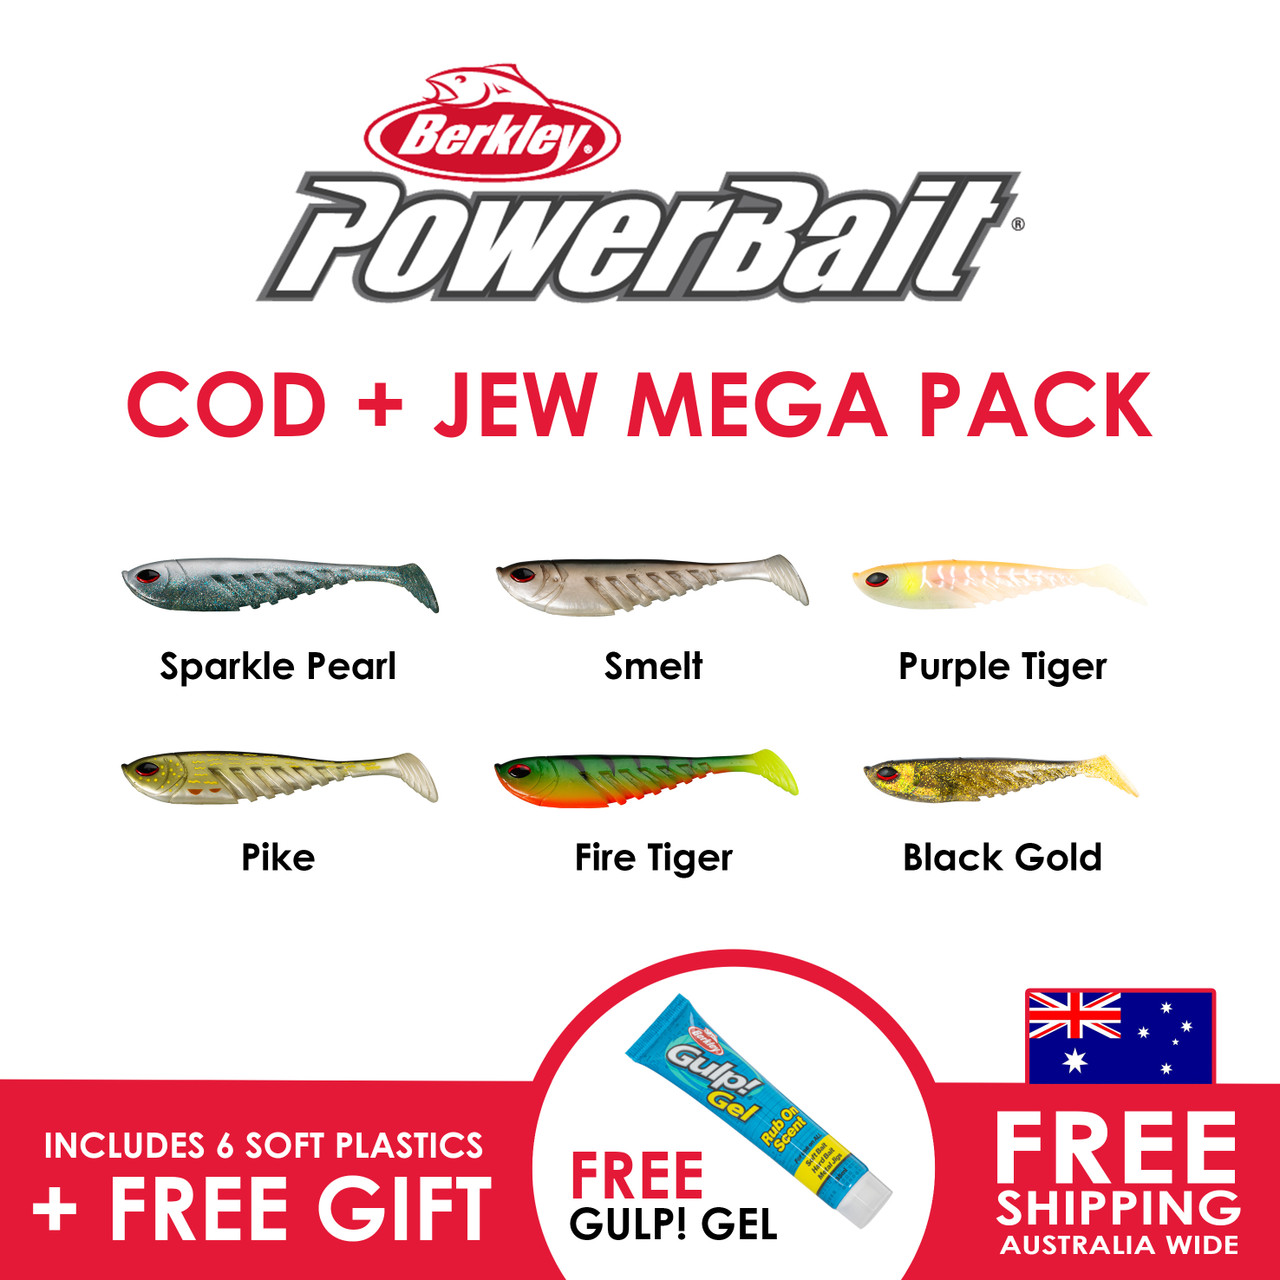 Berkley Powerbait Giant Cod + Jew Fish MEGA PACK (with FREE Gift)